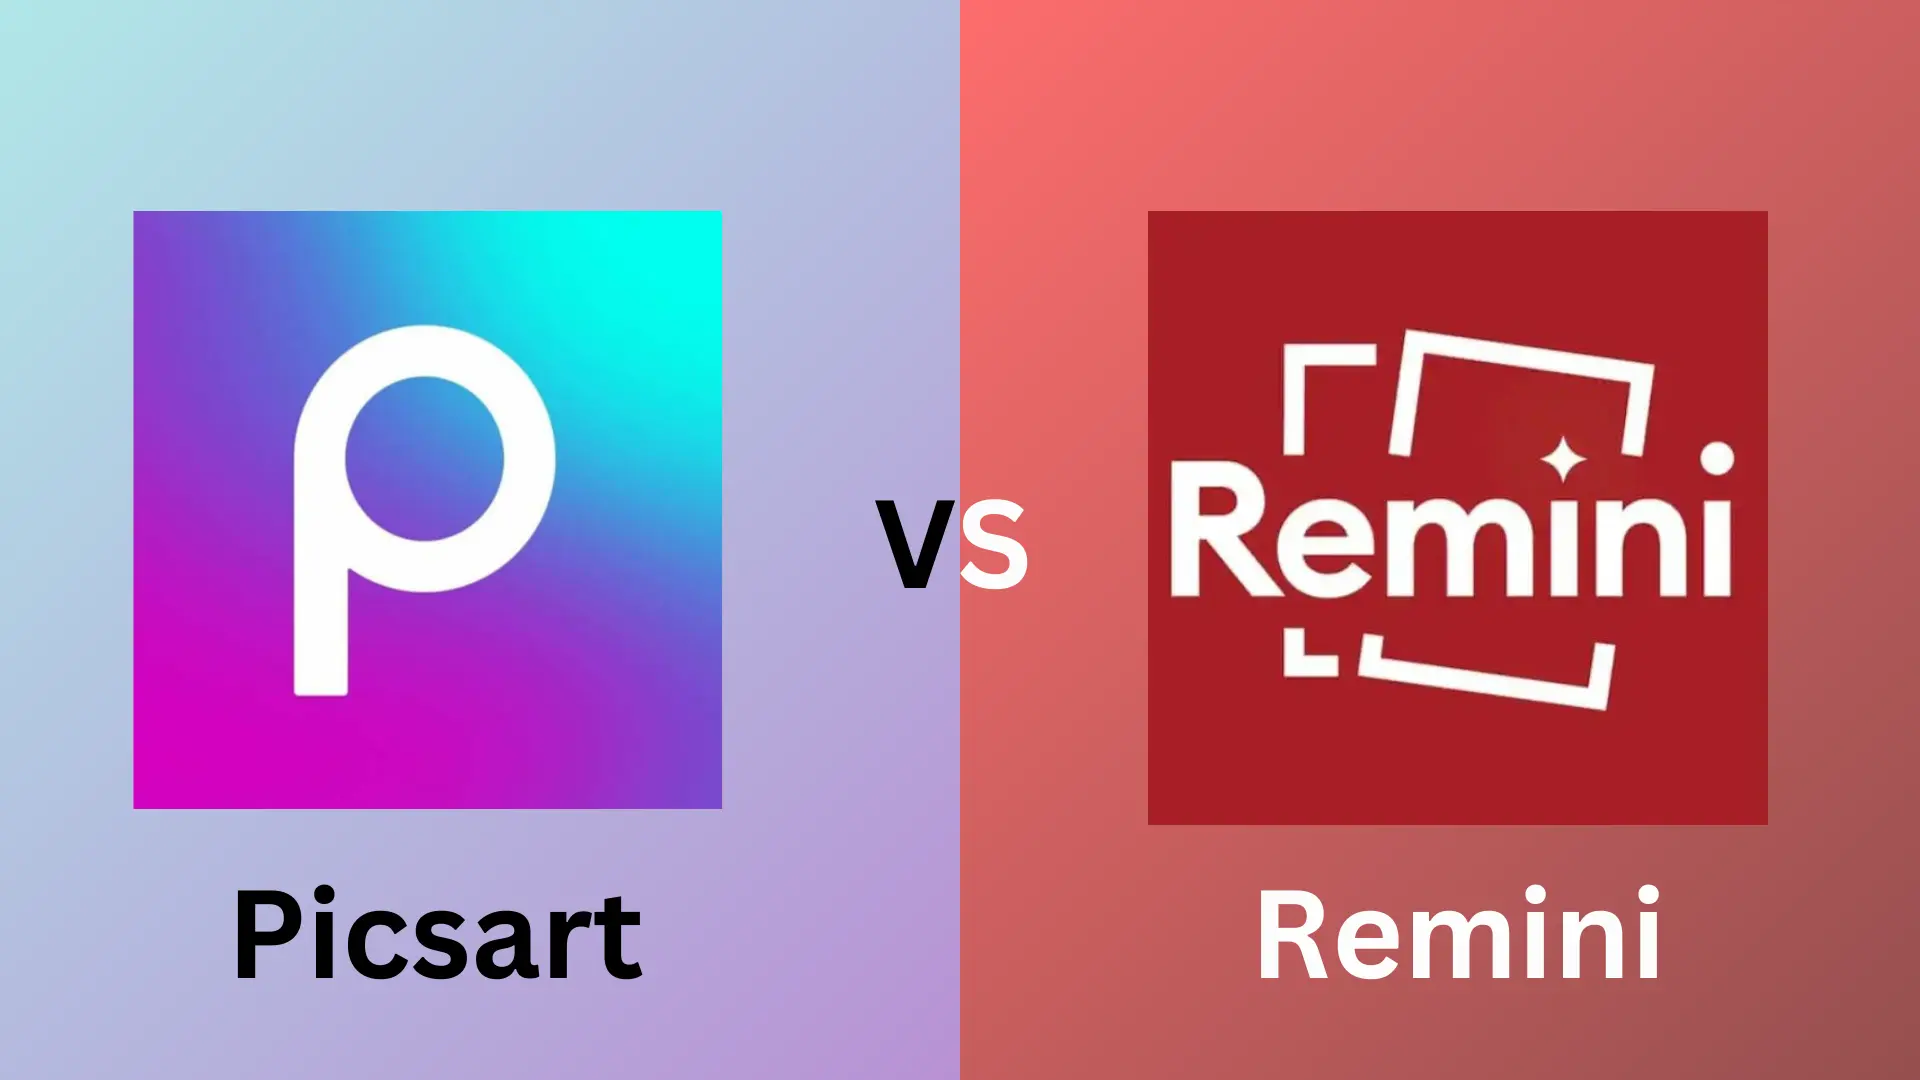 picsart vs remini, feature image